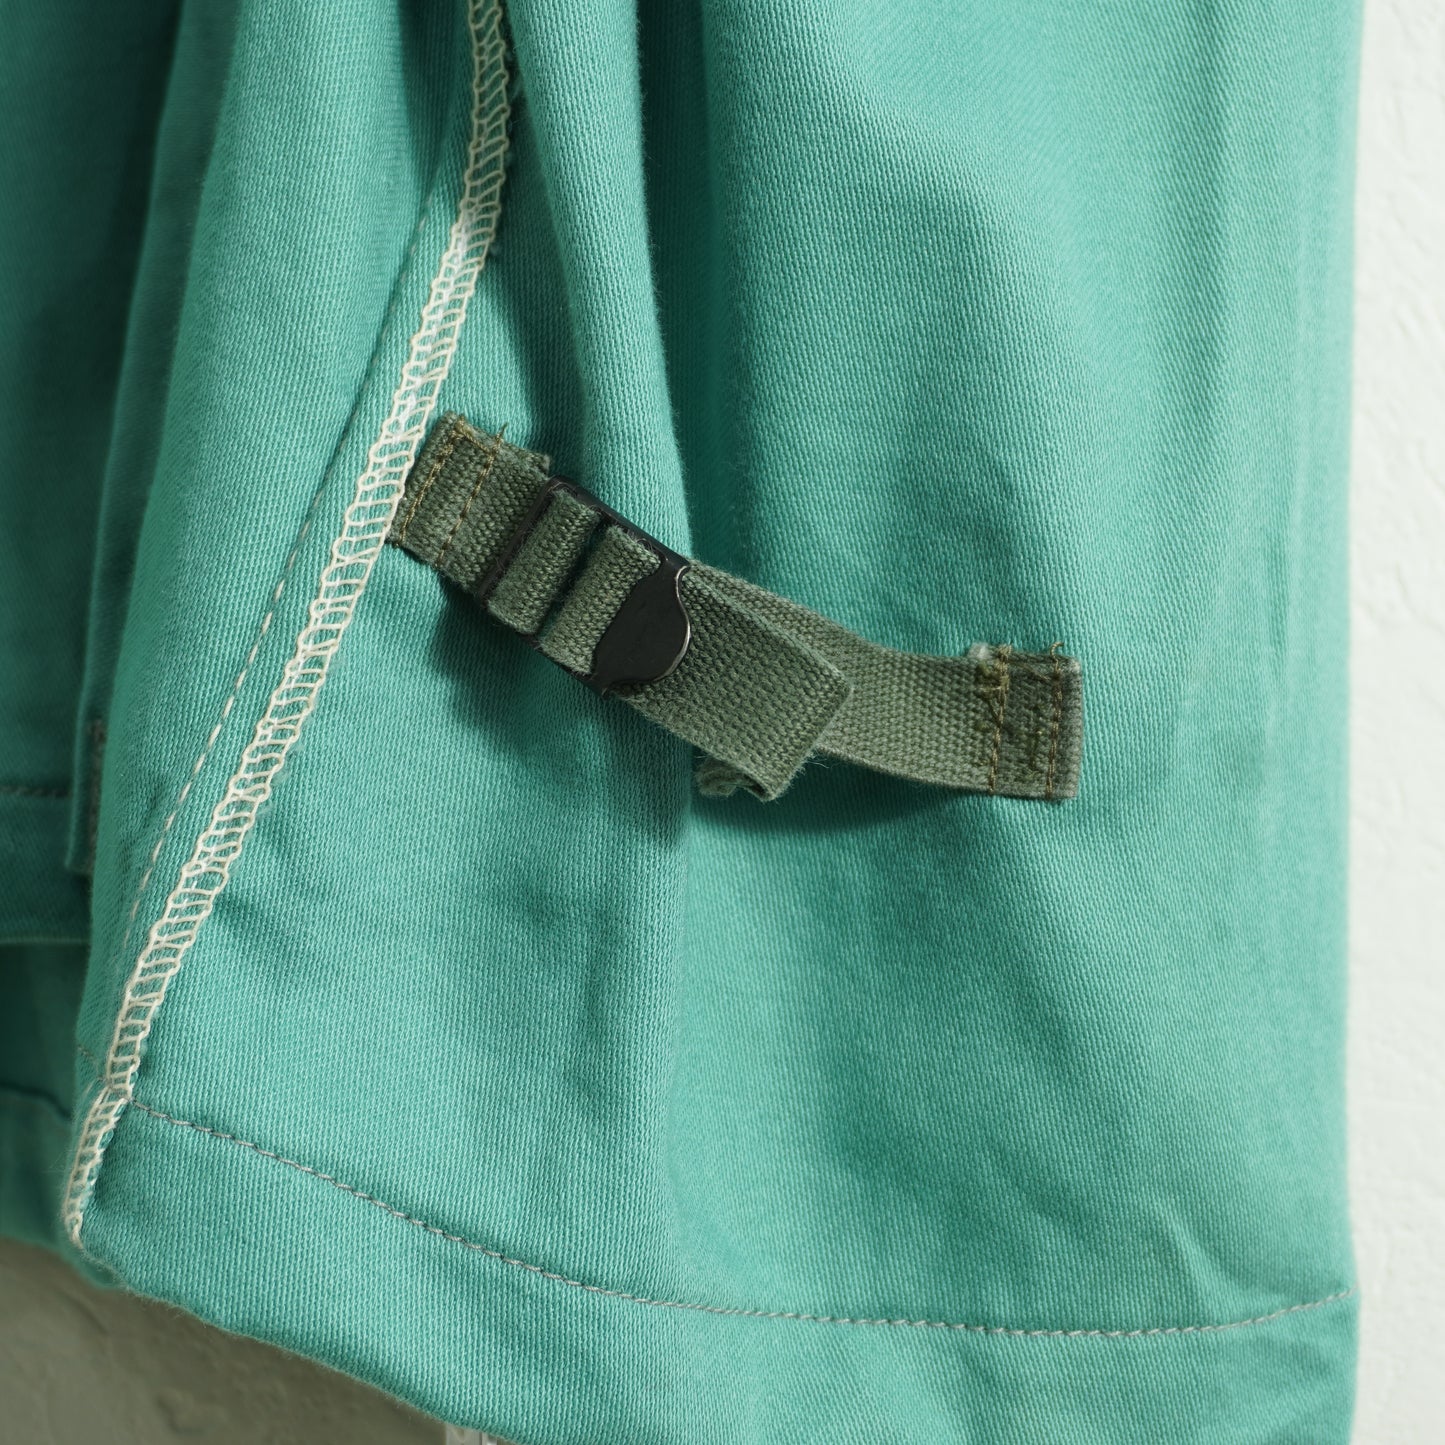 CHANGES WESTEX FR Fabric Remake China Jacket